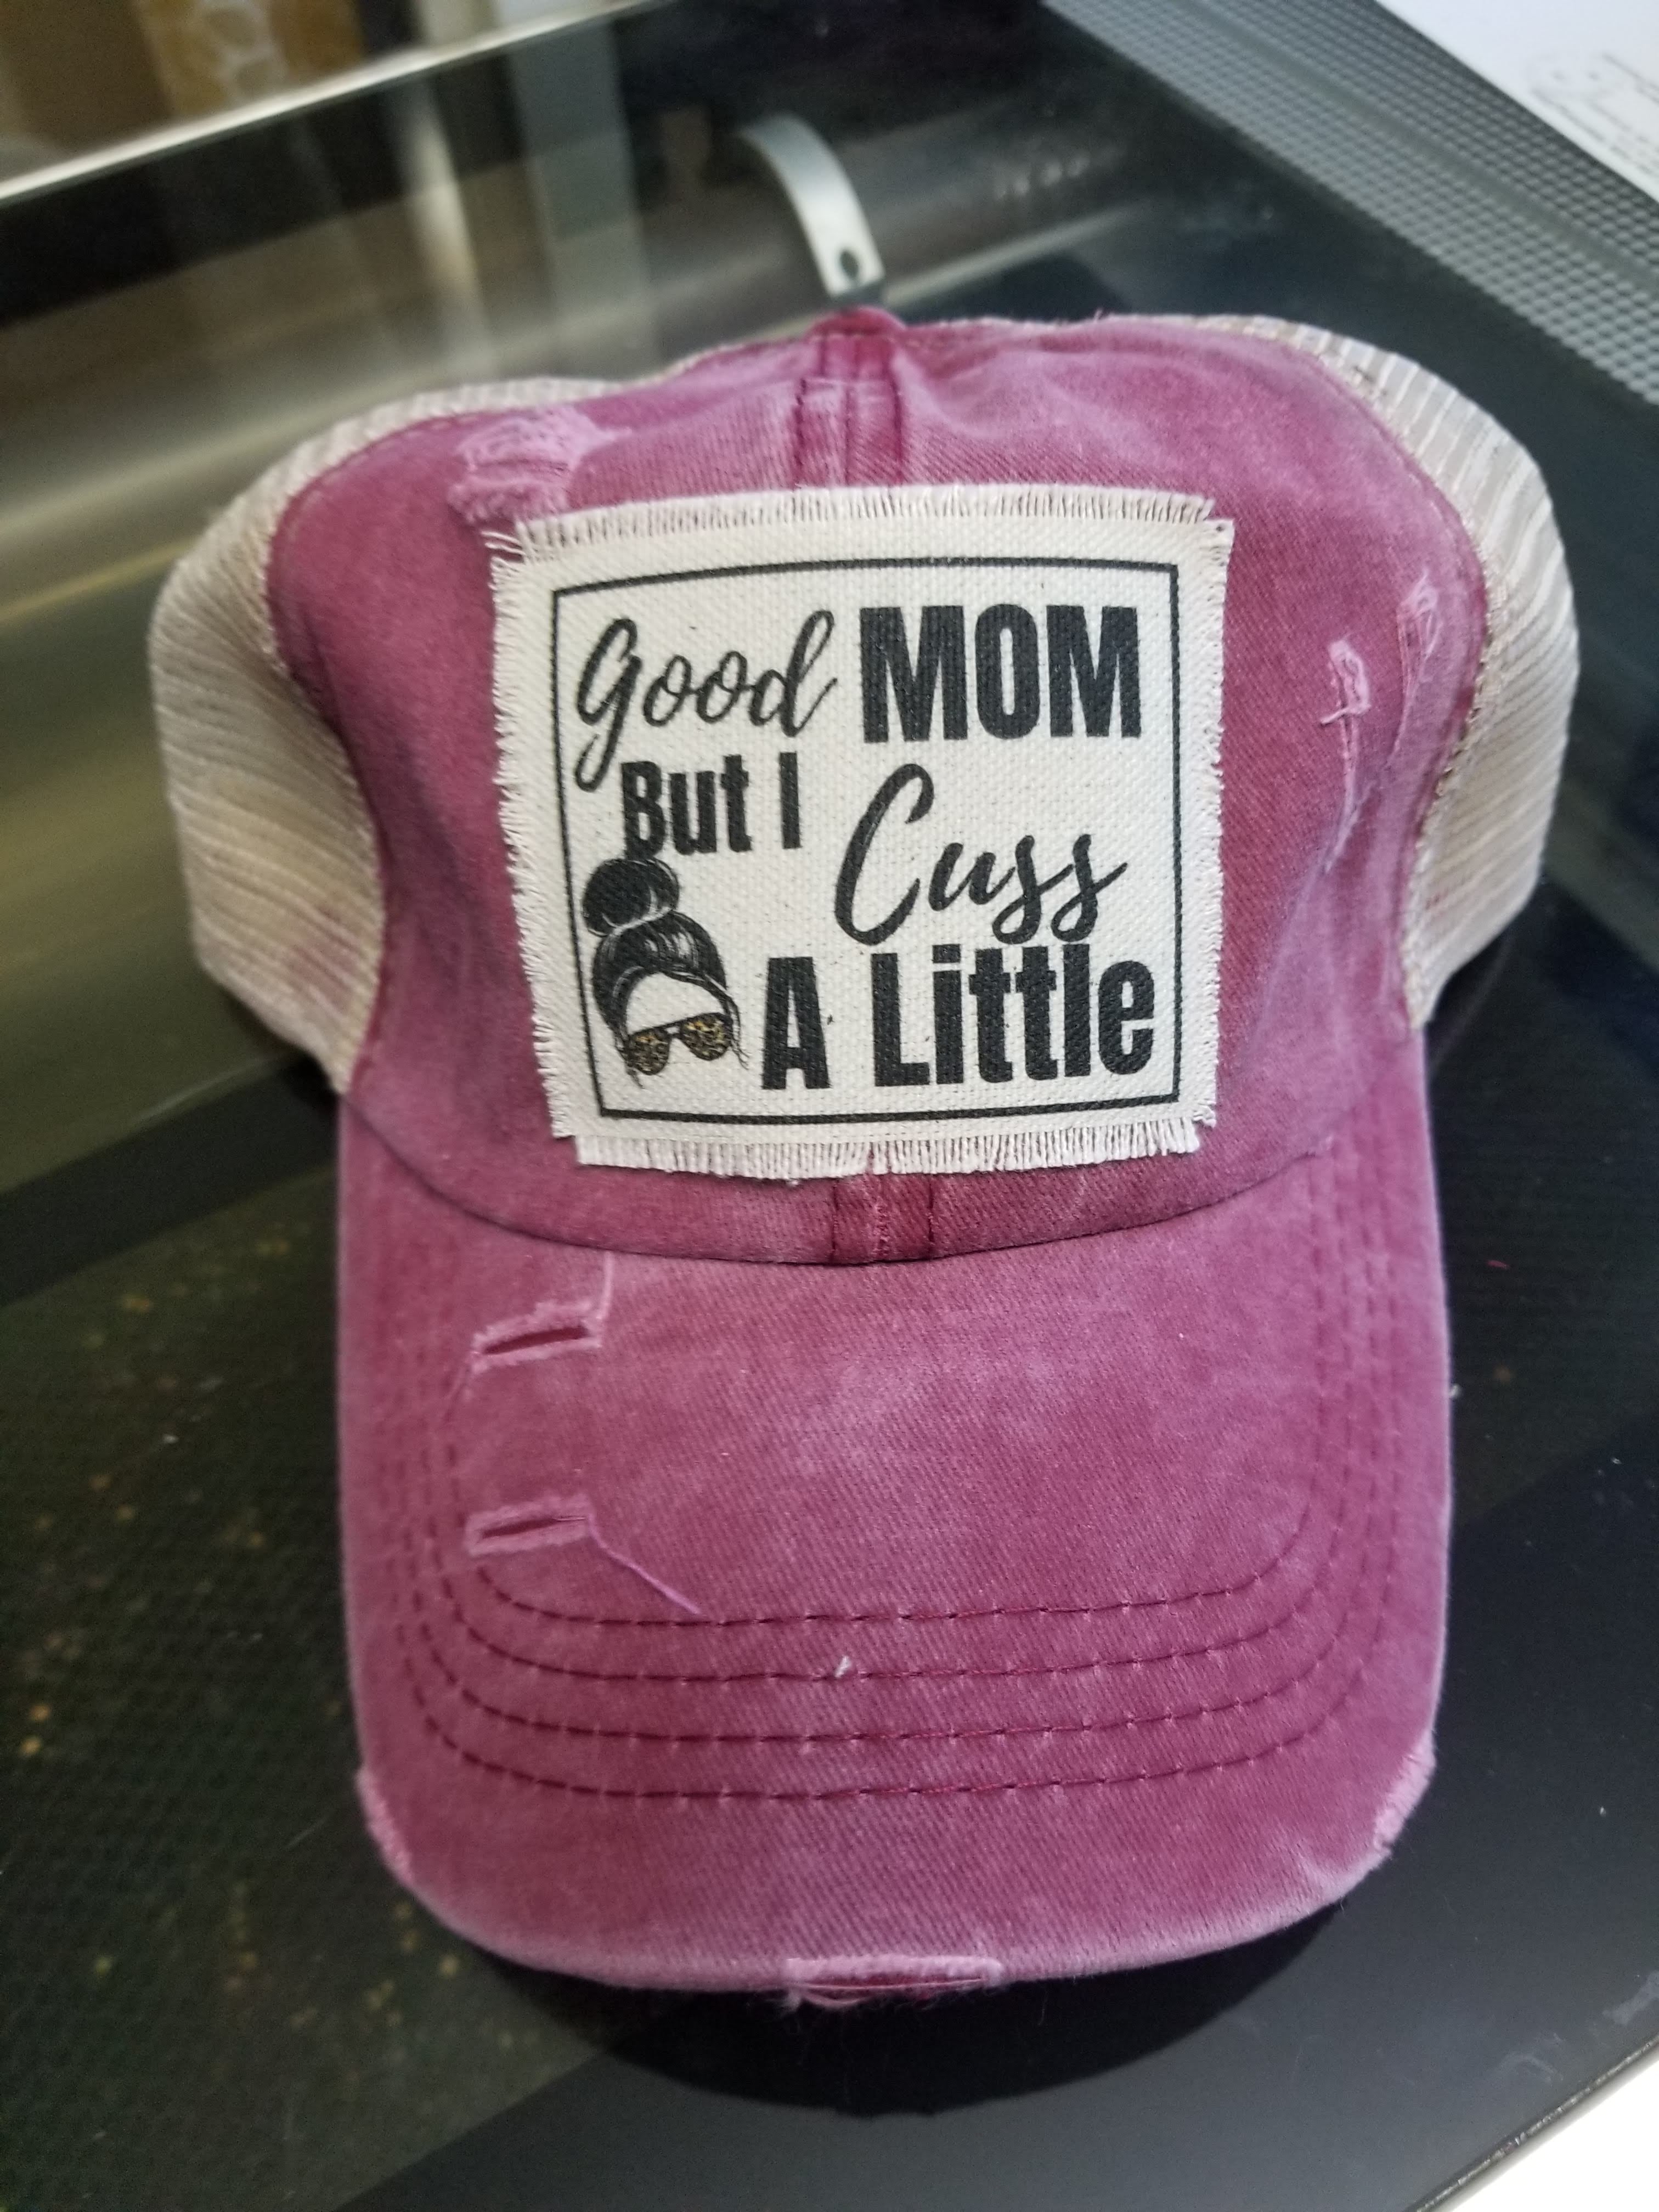 Good MOM but I cuss a little hat